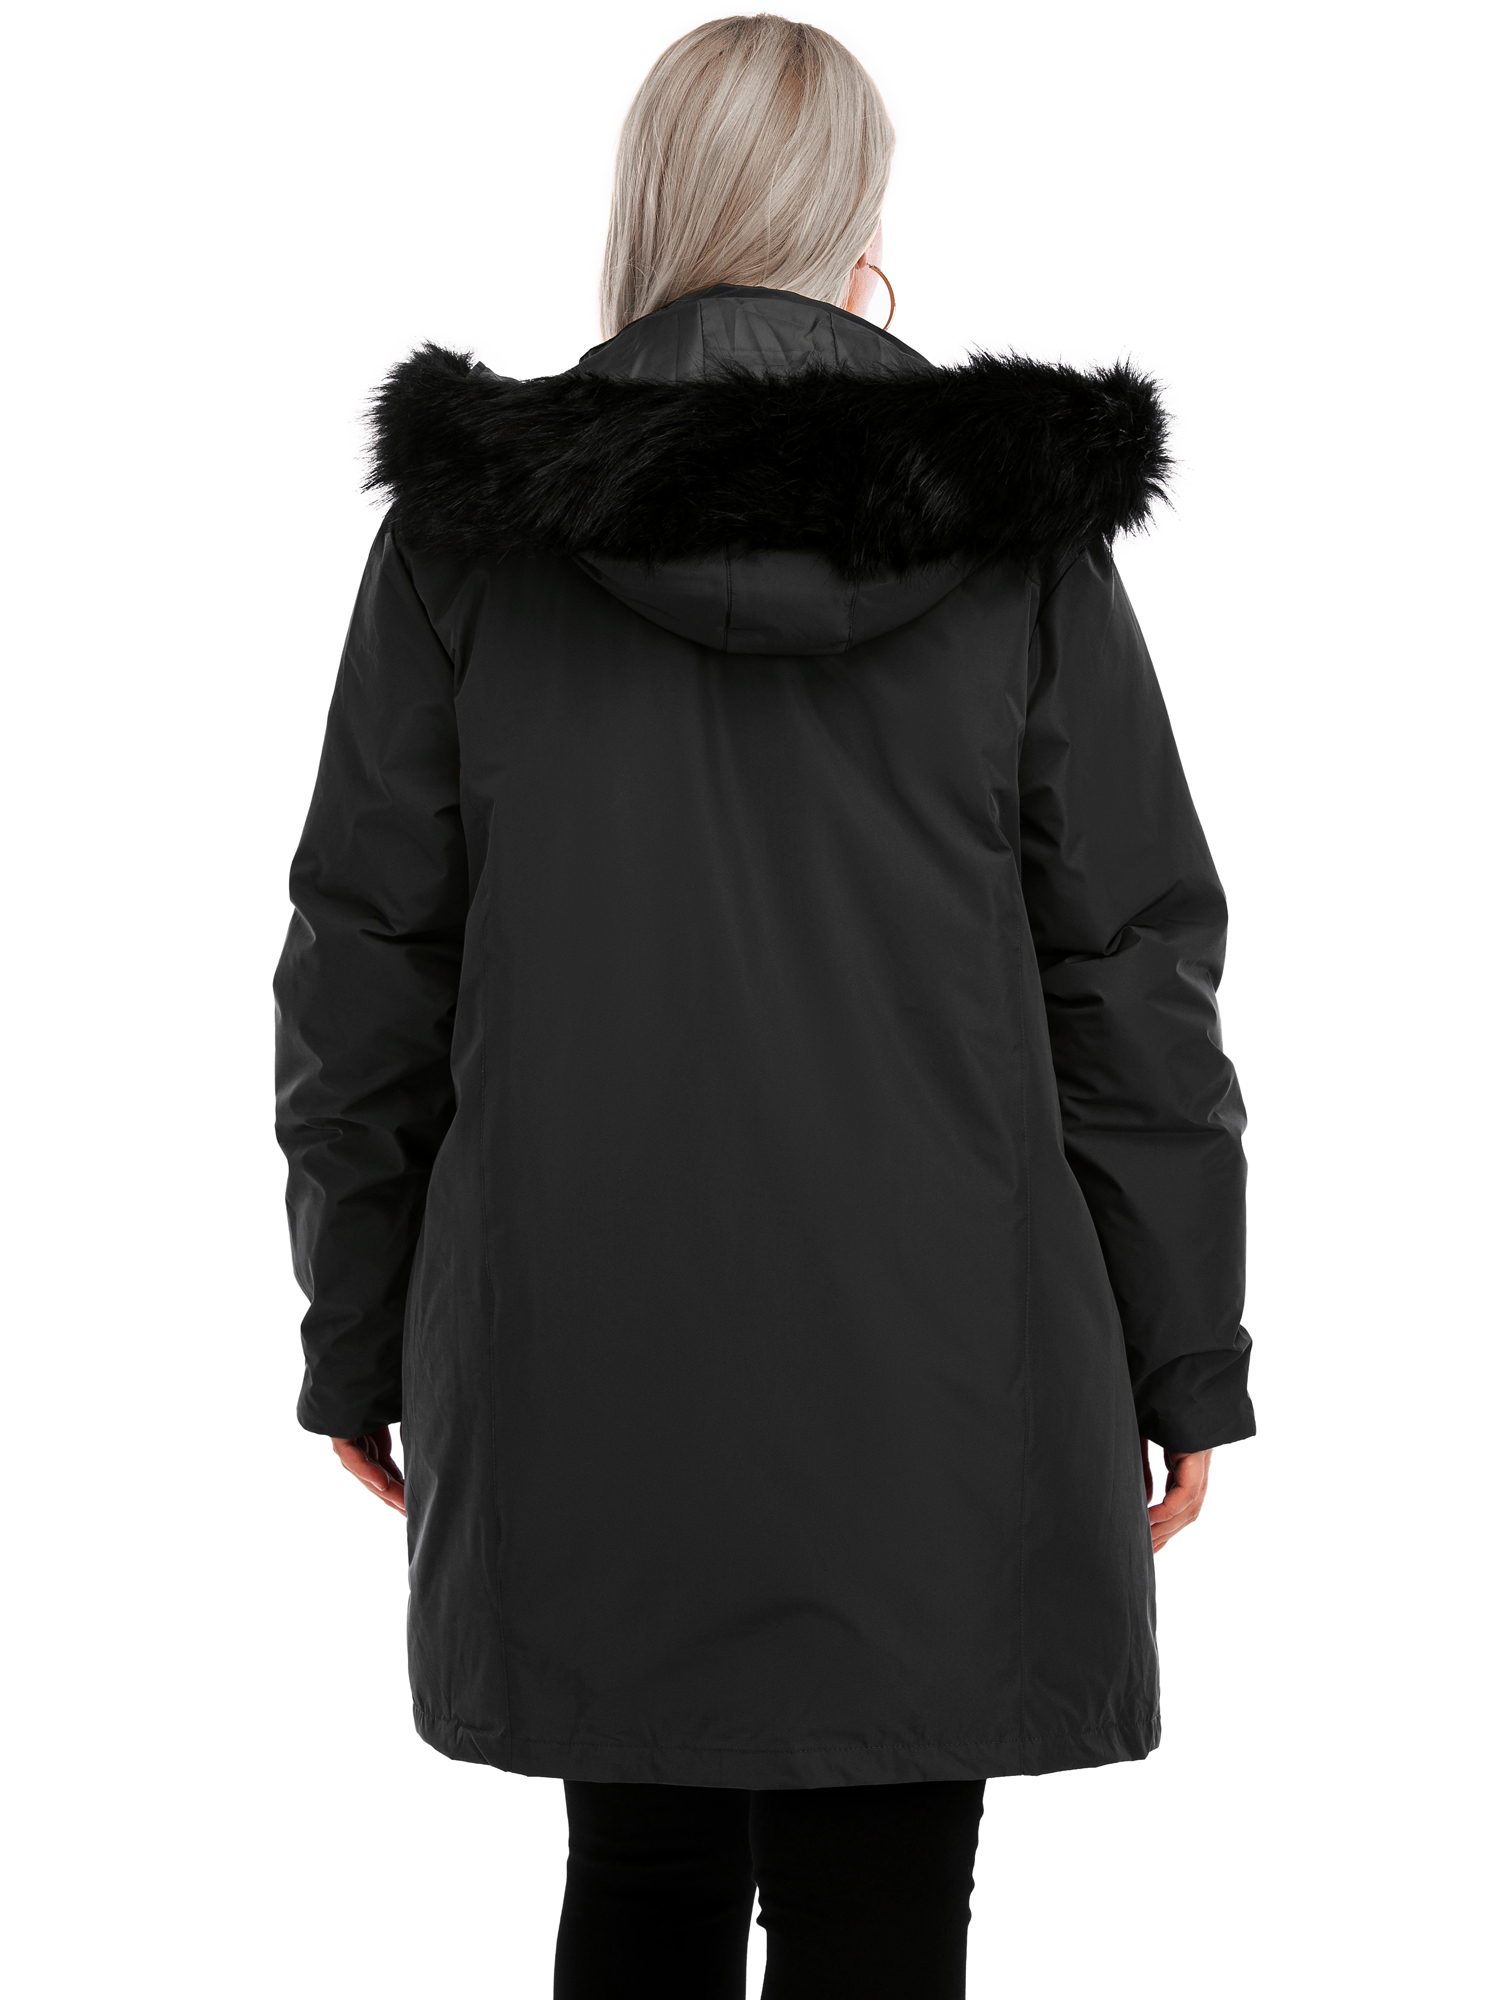 LELINTA Women Plus Size Winter Coats Hooded Warm Puffer Lined Jacket Zip Parka Raincoat Active Outdoor Trench Long Coats - image 5 of 7